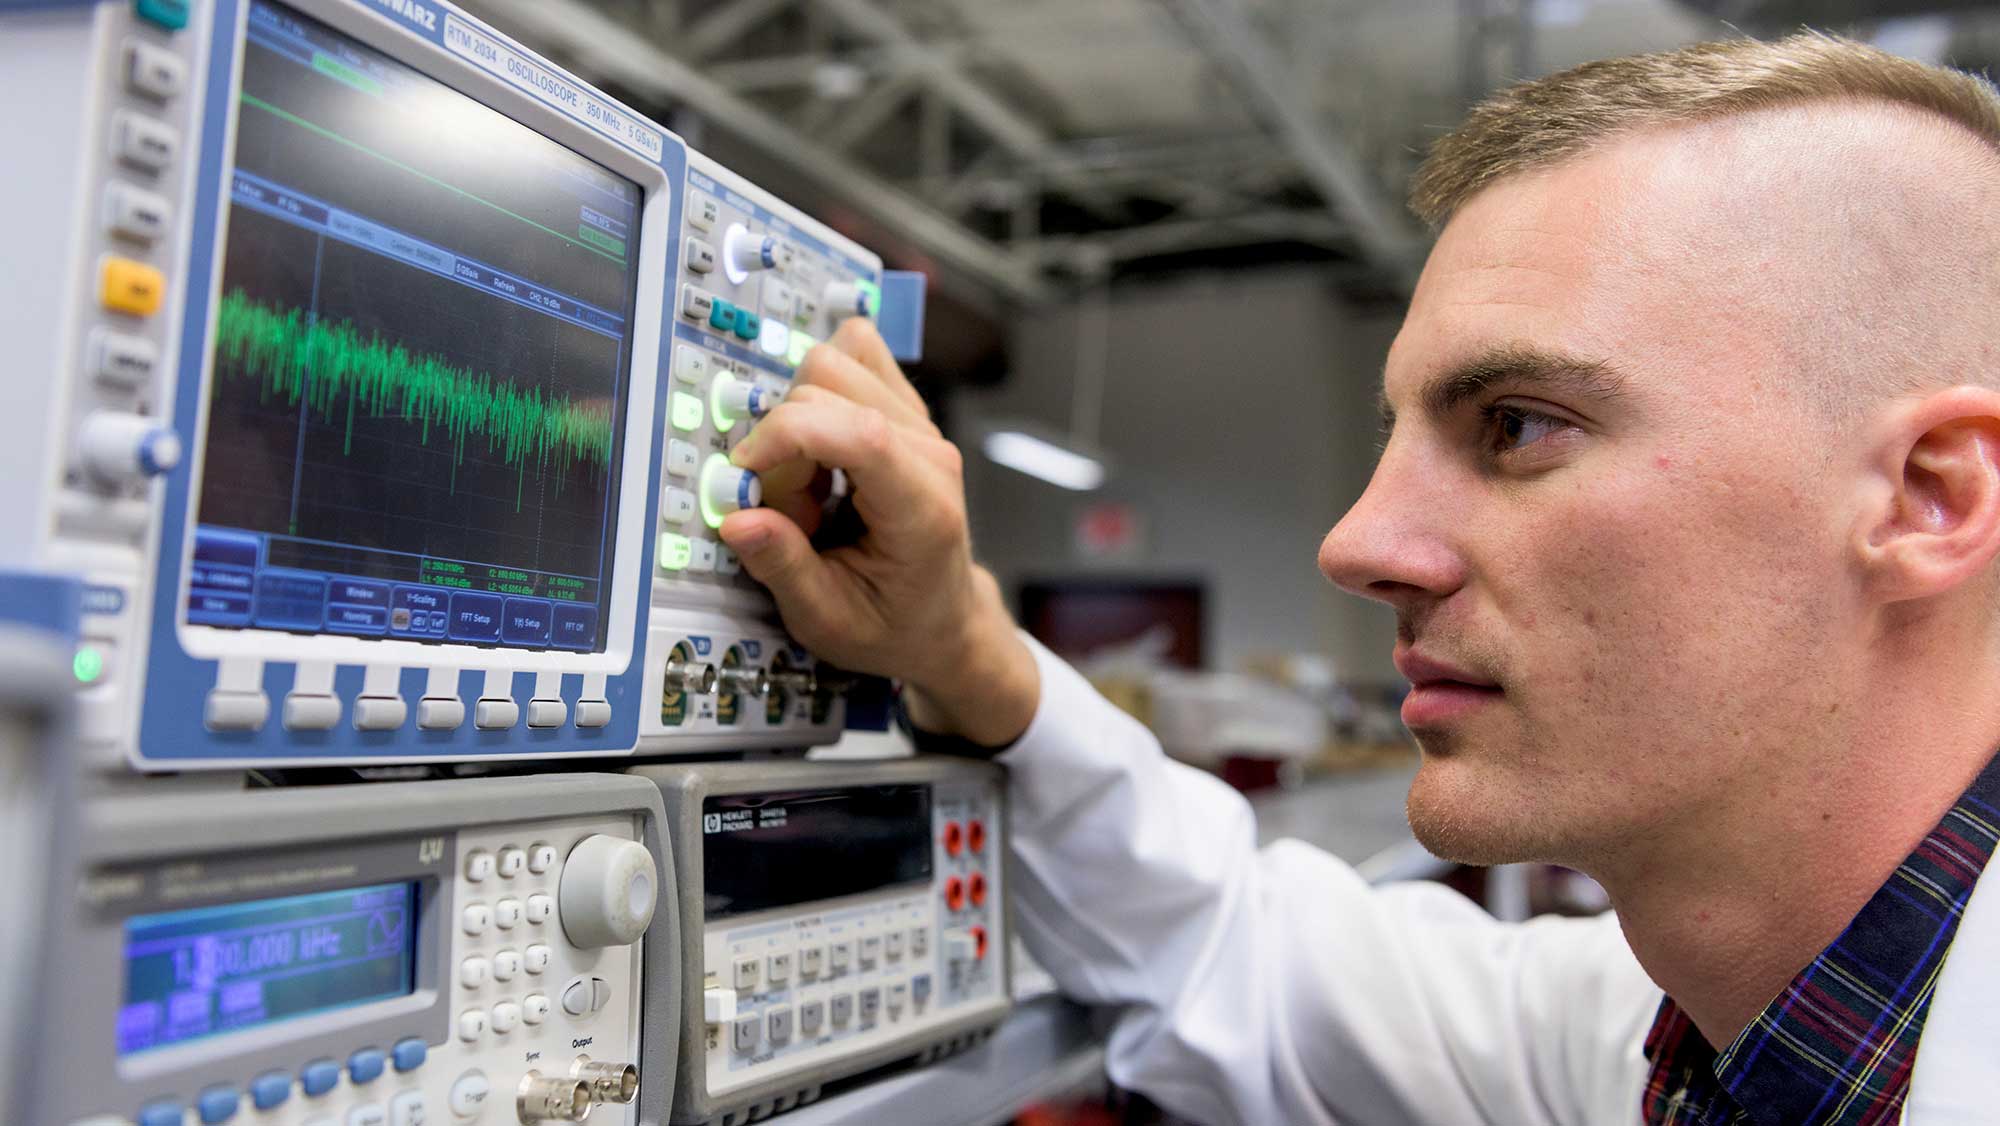 biomedical engineering student using an oscilloscope